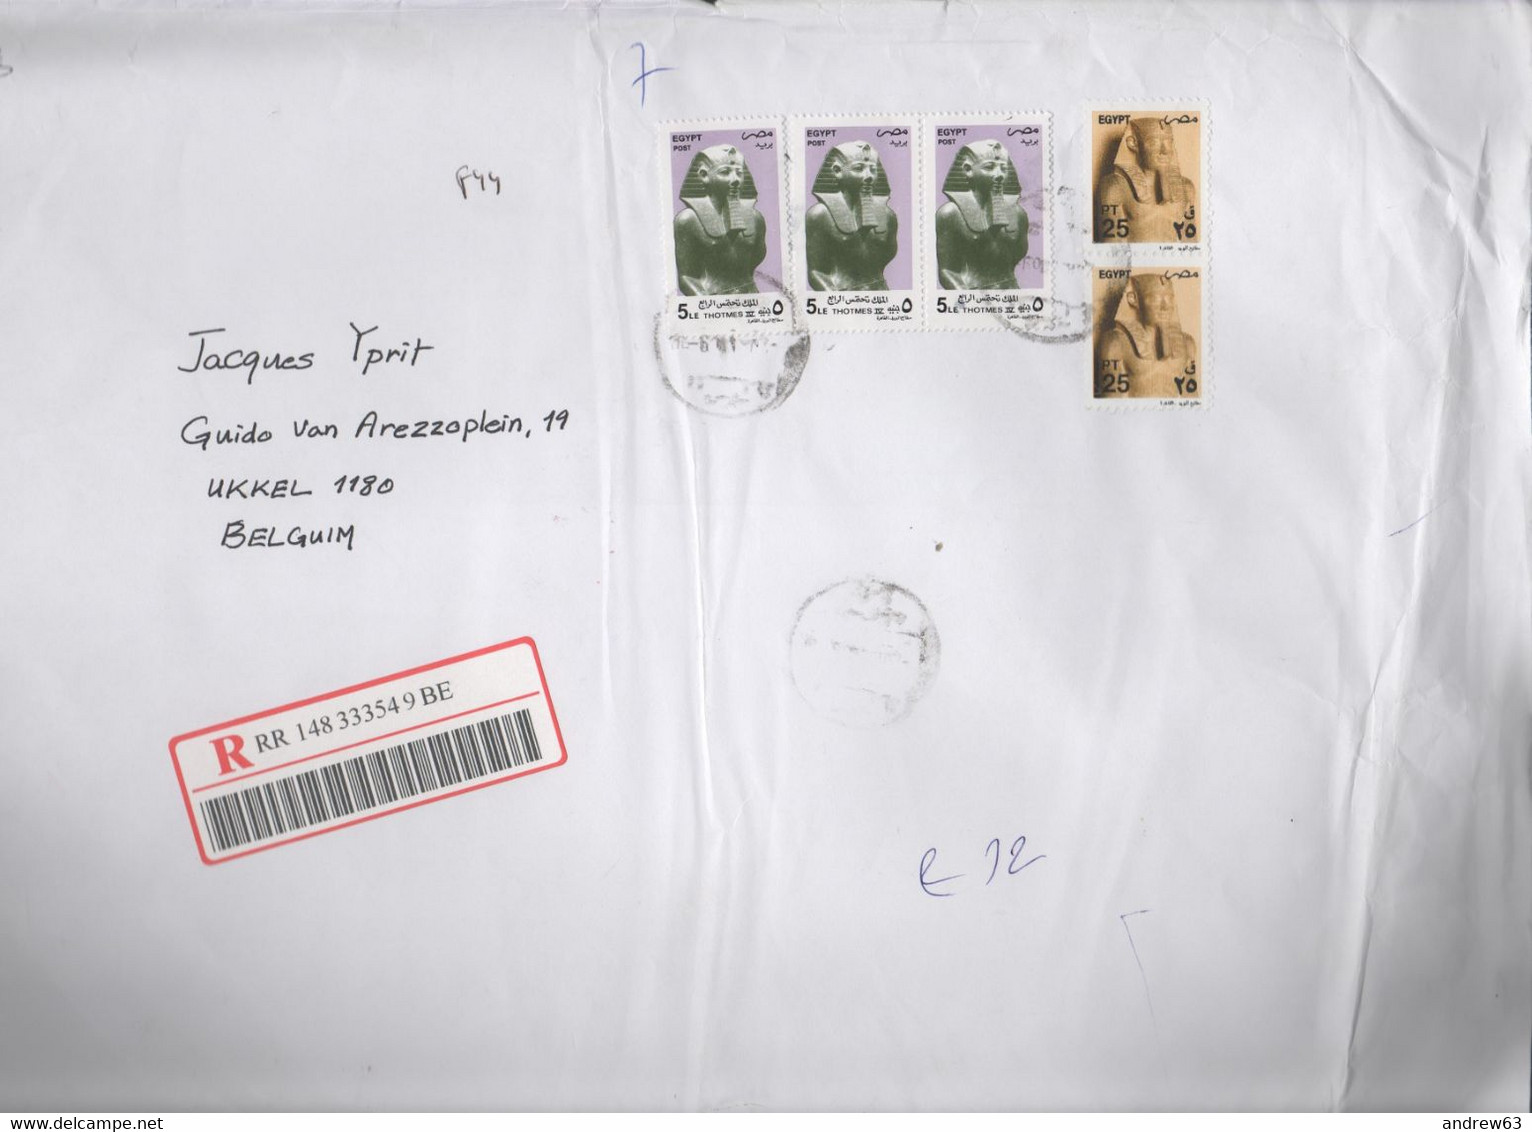 EGITTO - EGYPTE - Egypt - 2006 - 3 X 5 + 2 X 25 - Registered - Big Envelope -Viaggiata Da Alexandria Per Ukkel,Bruxelles - Covers & Documents